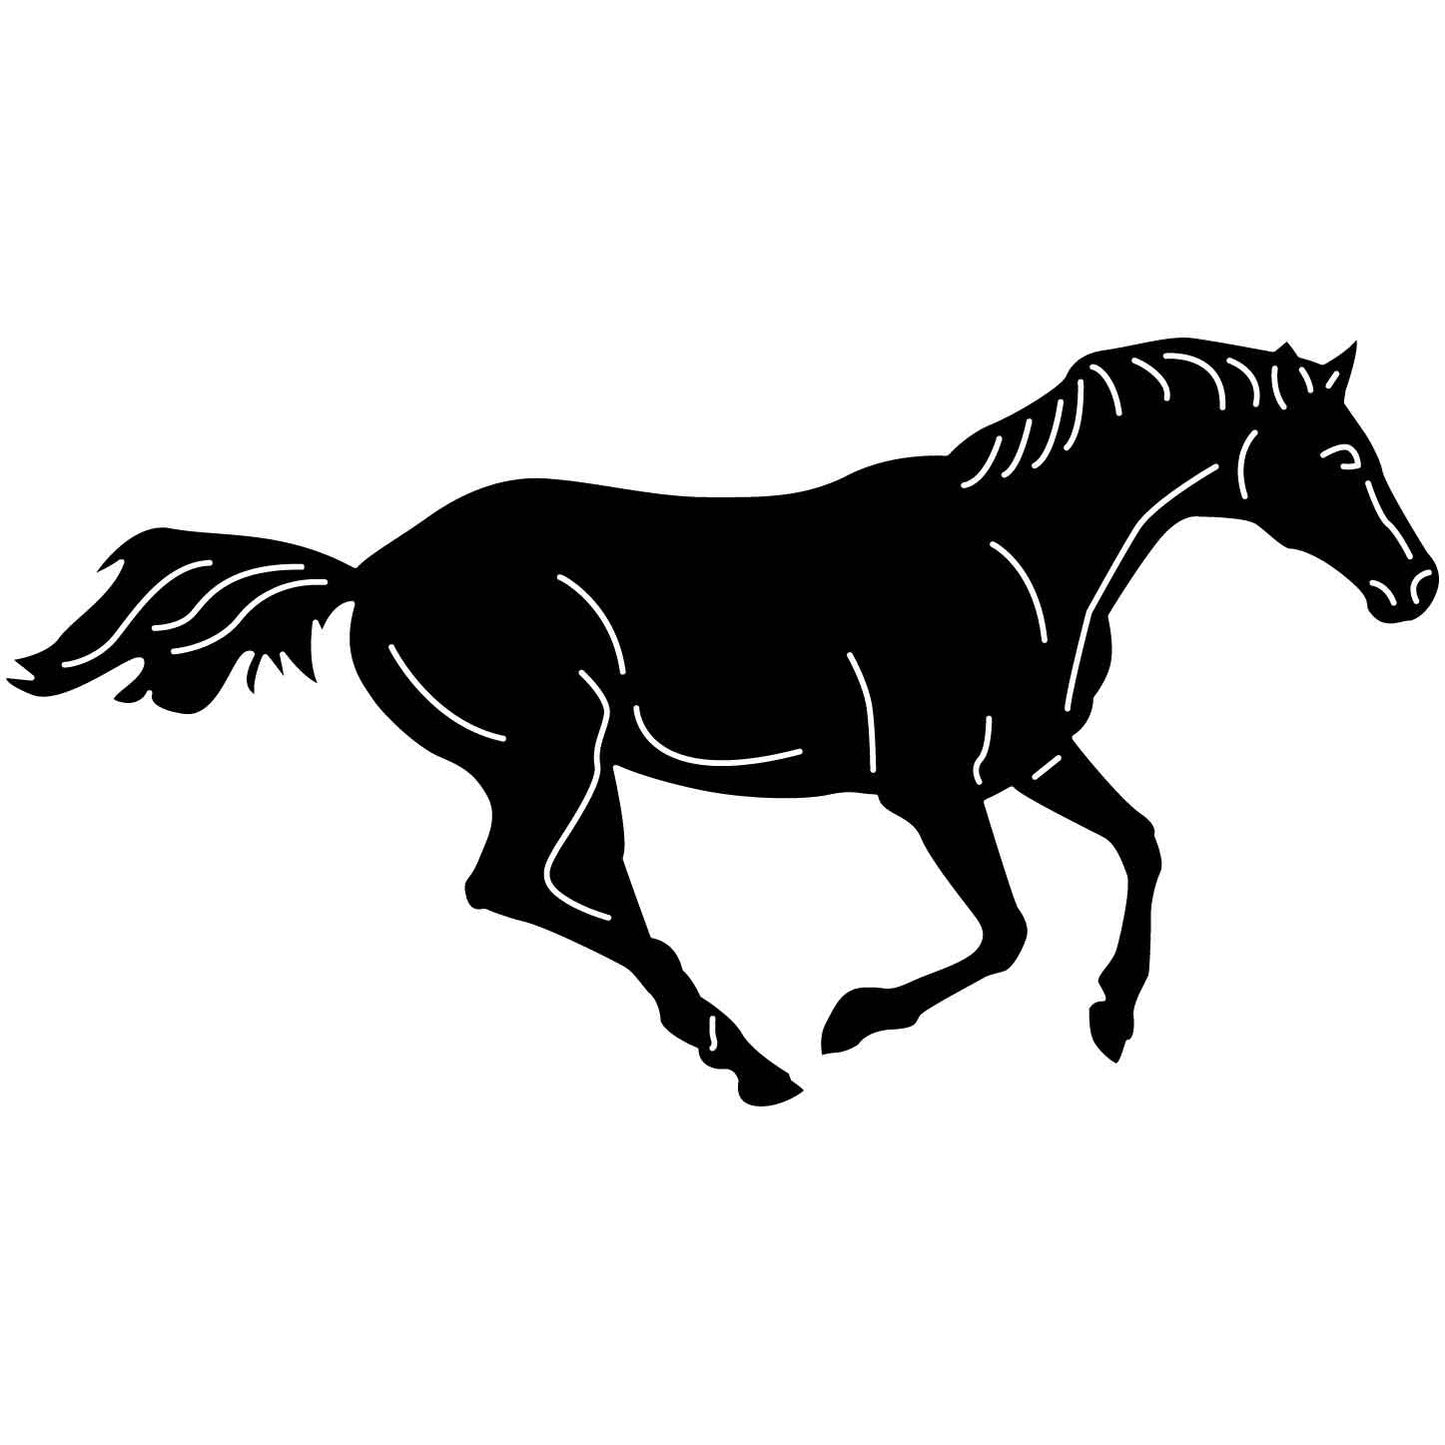 Horses and Cowboys 09